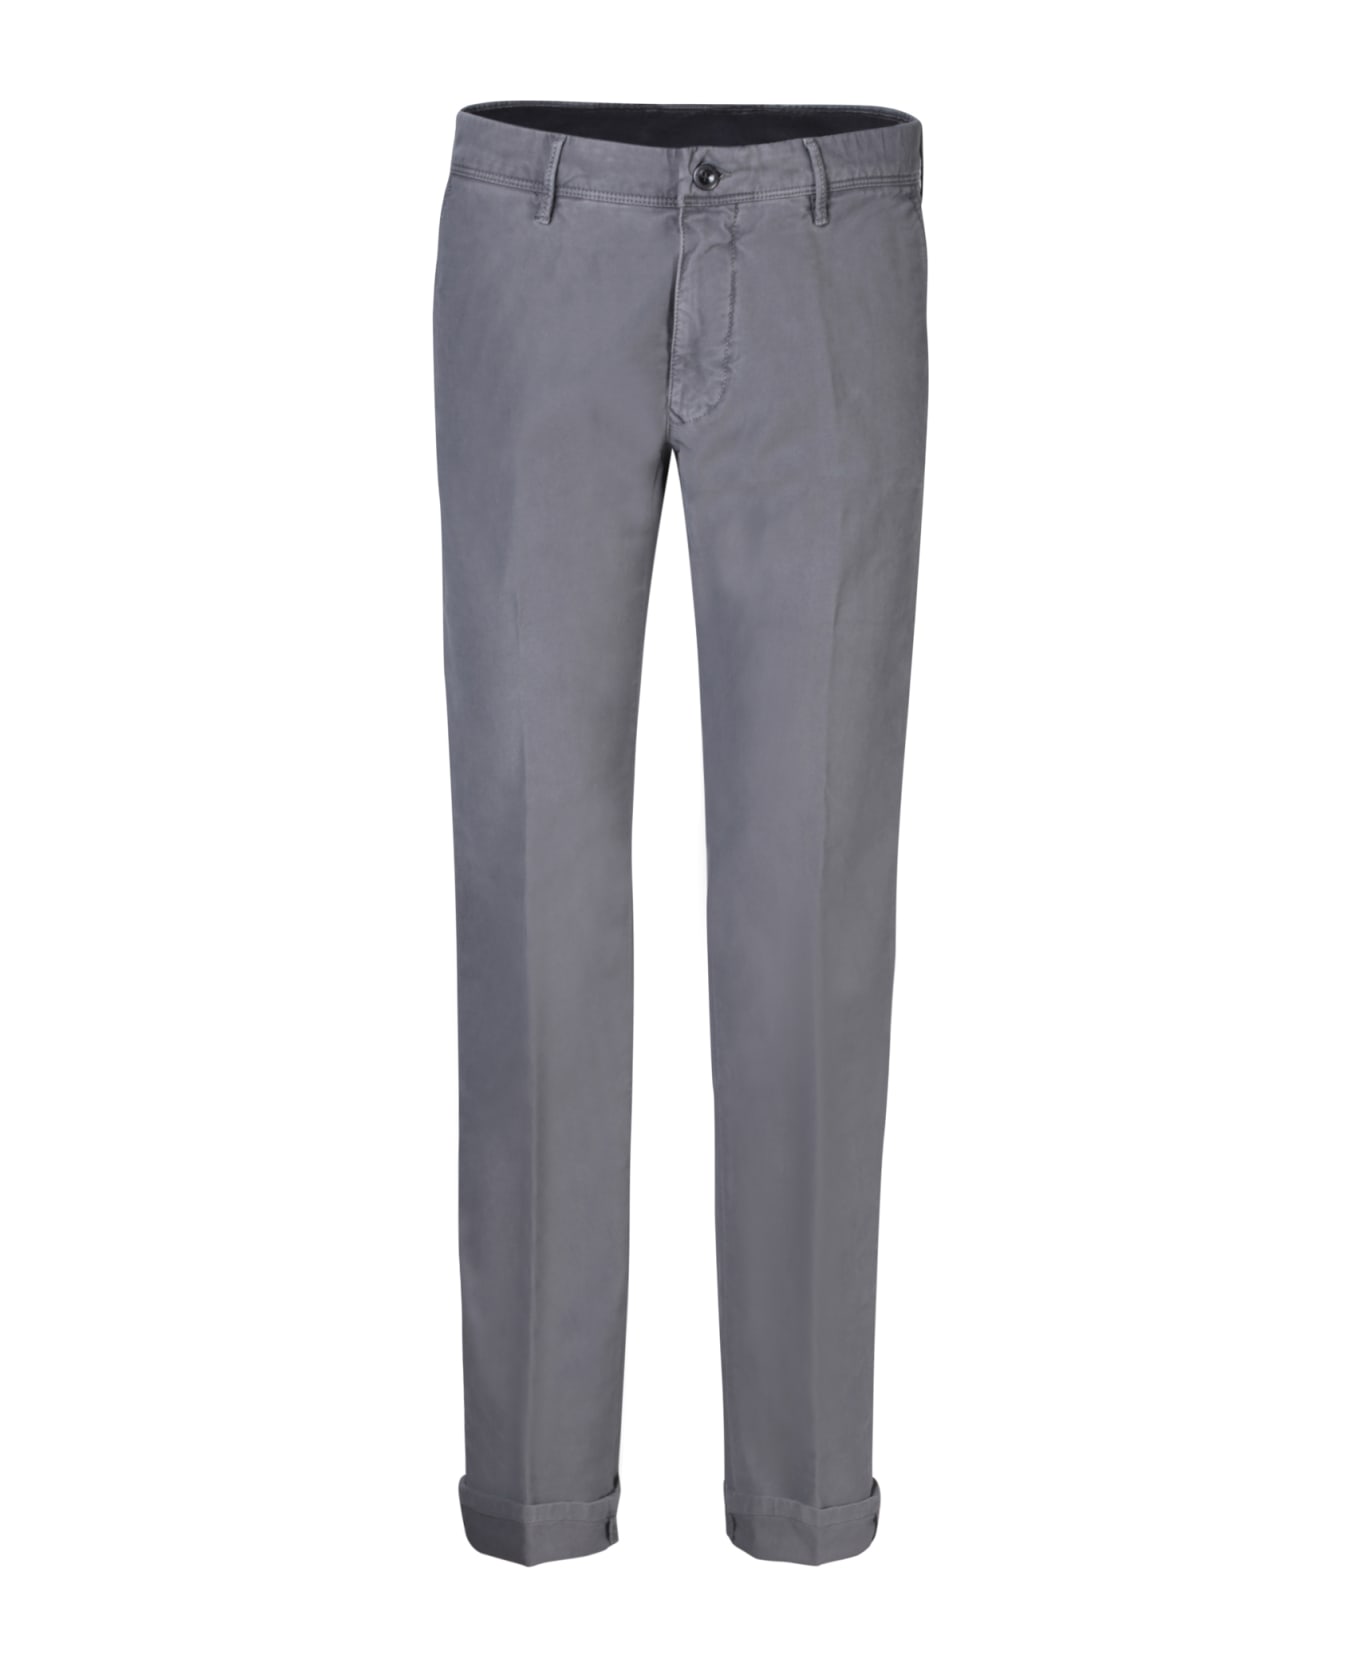 Incotex Cotton Grey Trousers - Grey